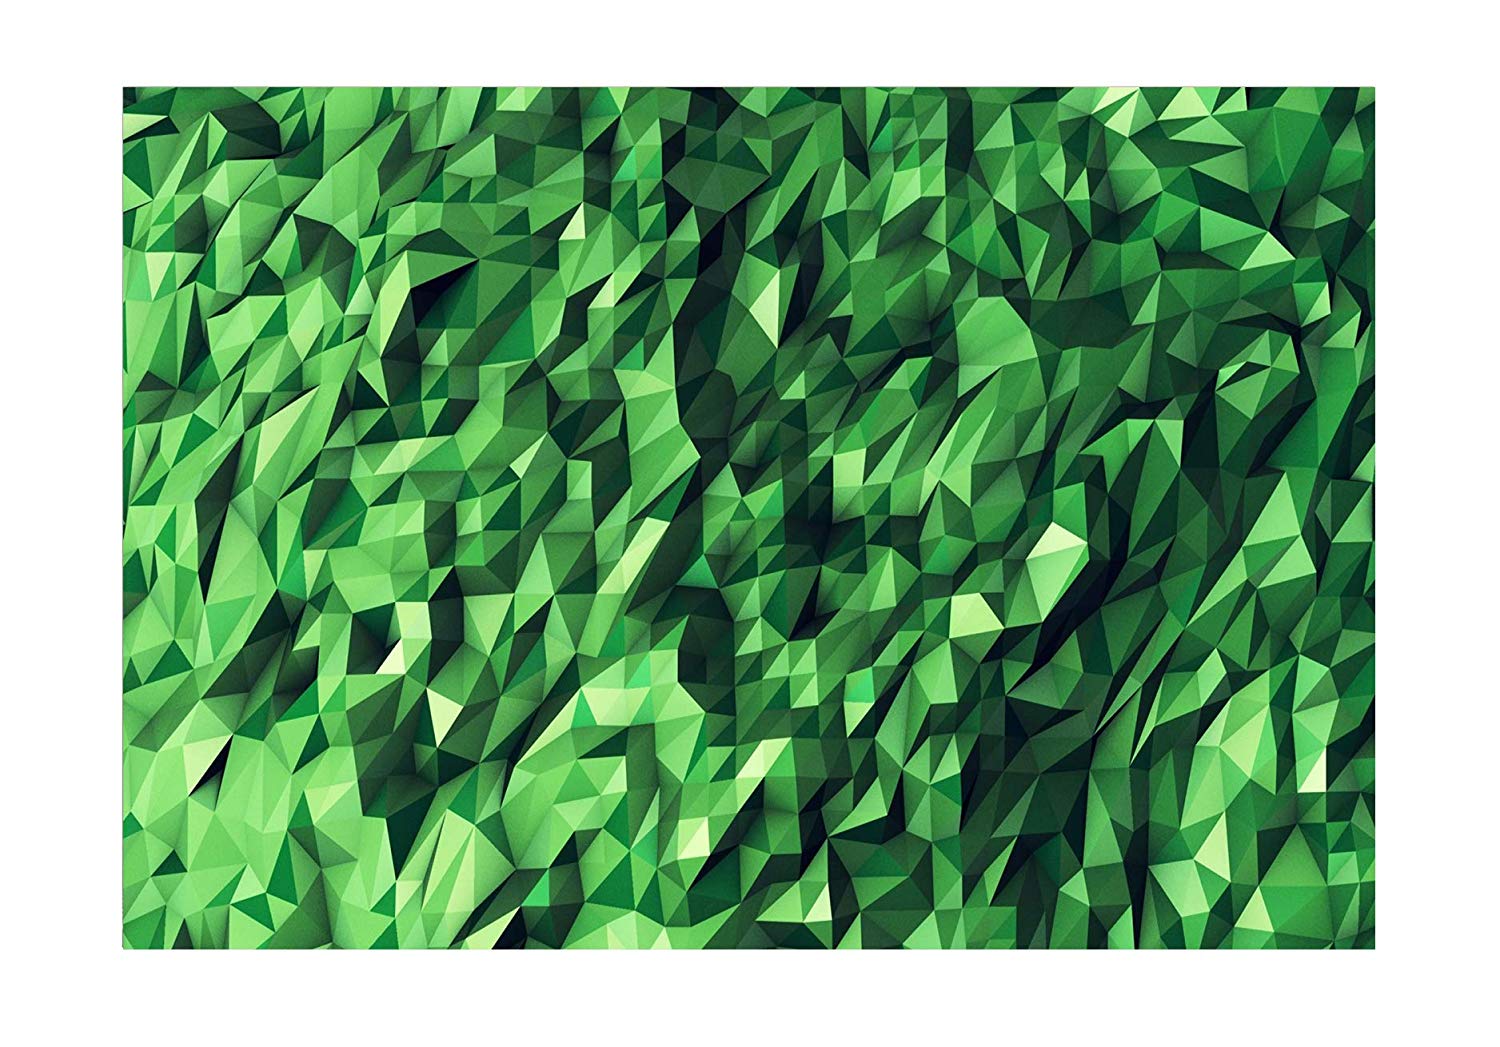 Solid Green Triangle Logo - Amazon.com : JANNINSE Abstract Solid Green Triangle Cuboid Geometric ...